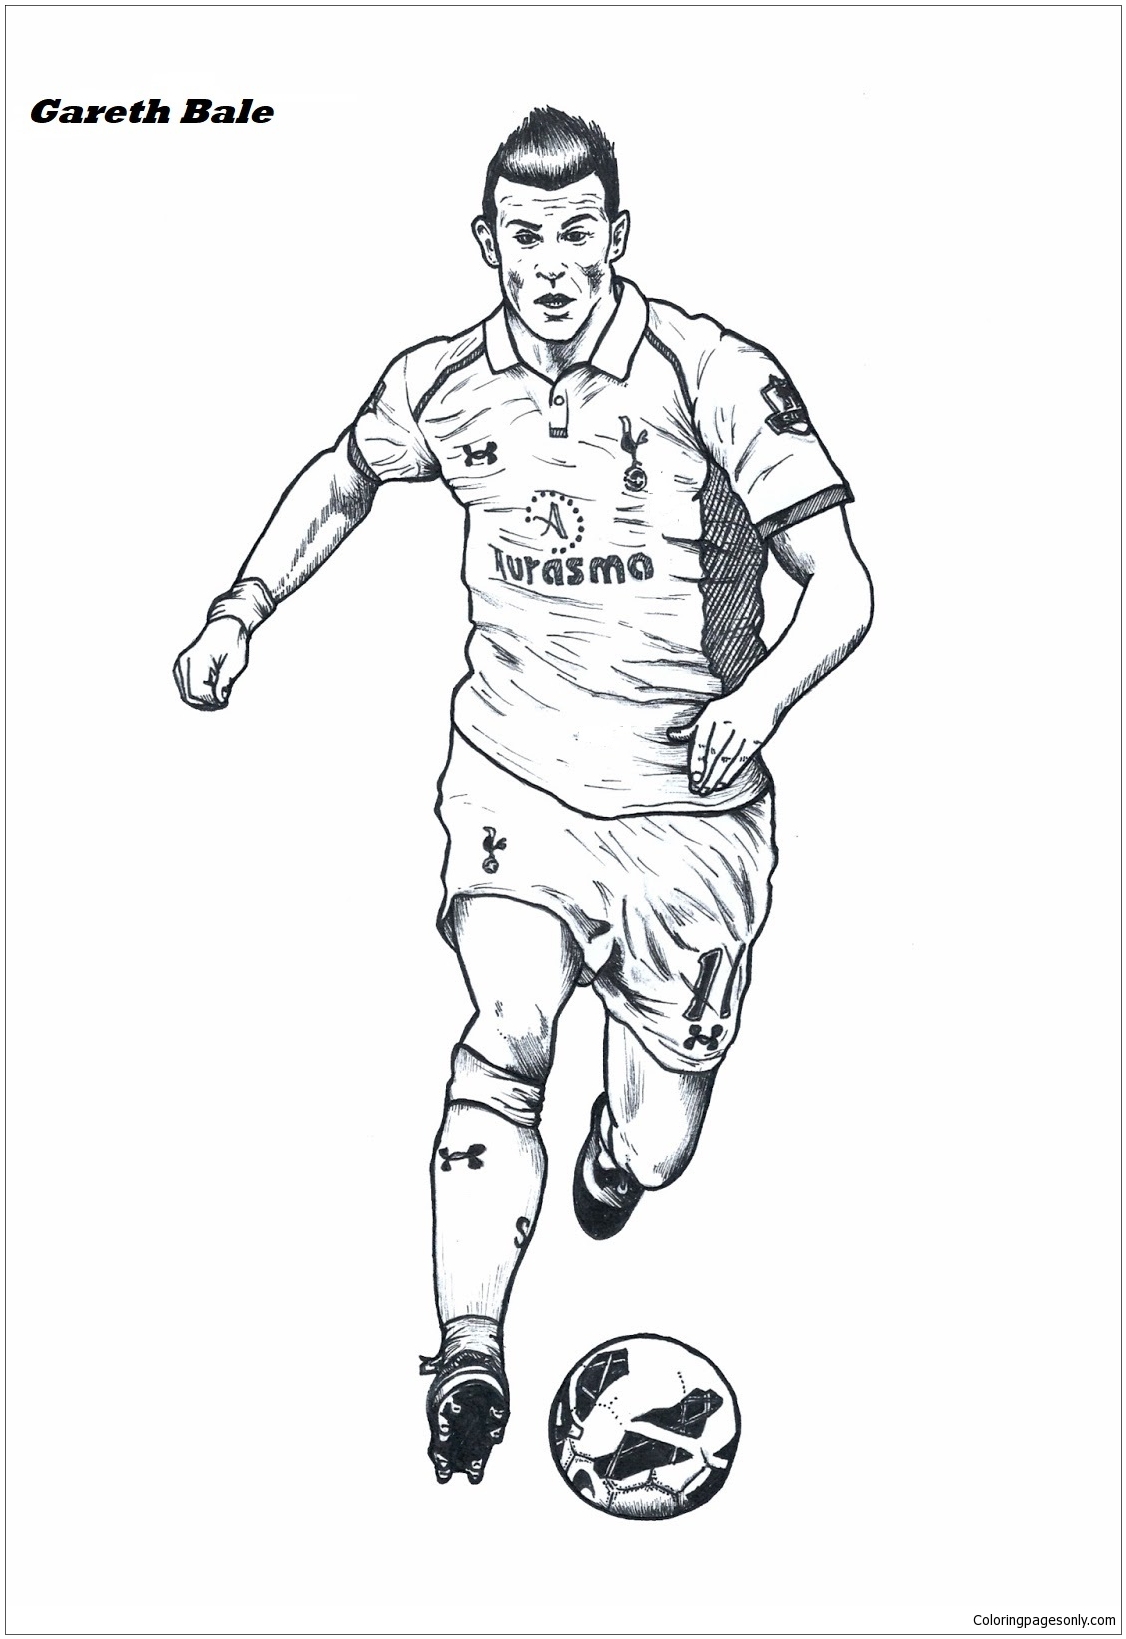 Gareth Bale-image 2 Coloring Page